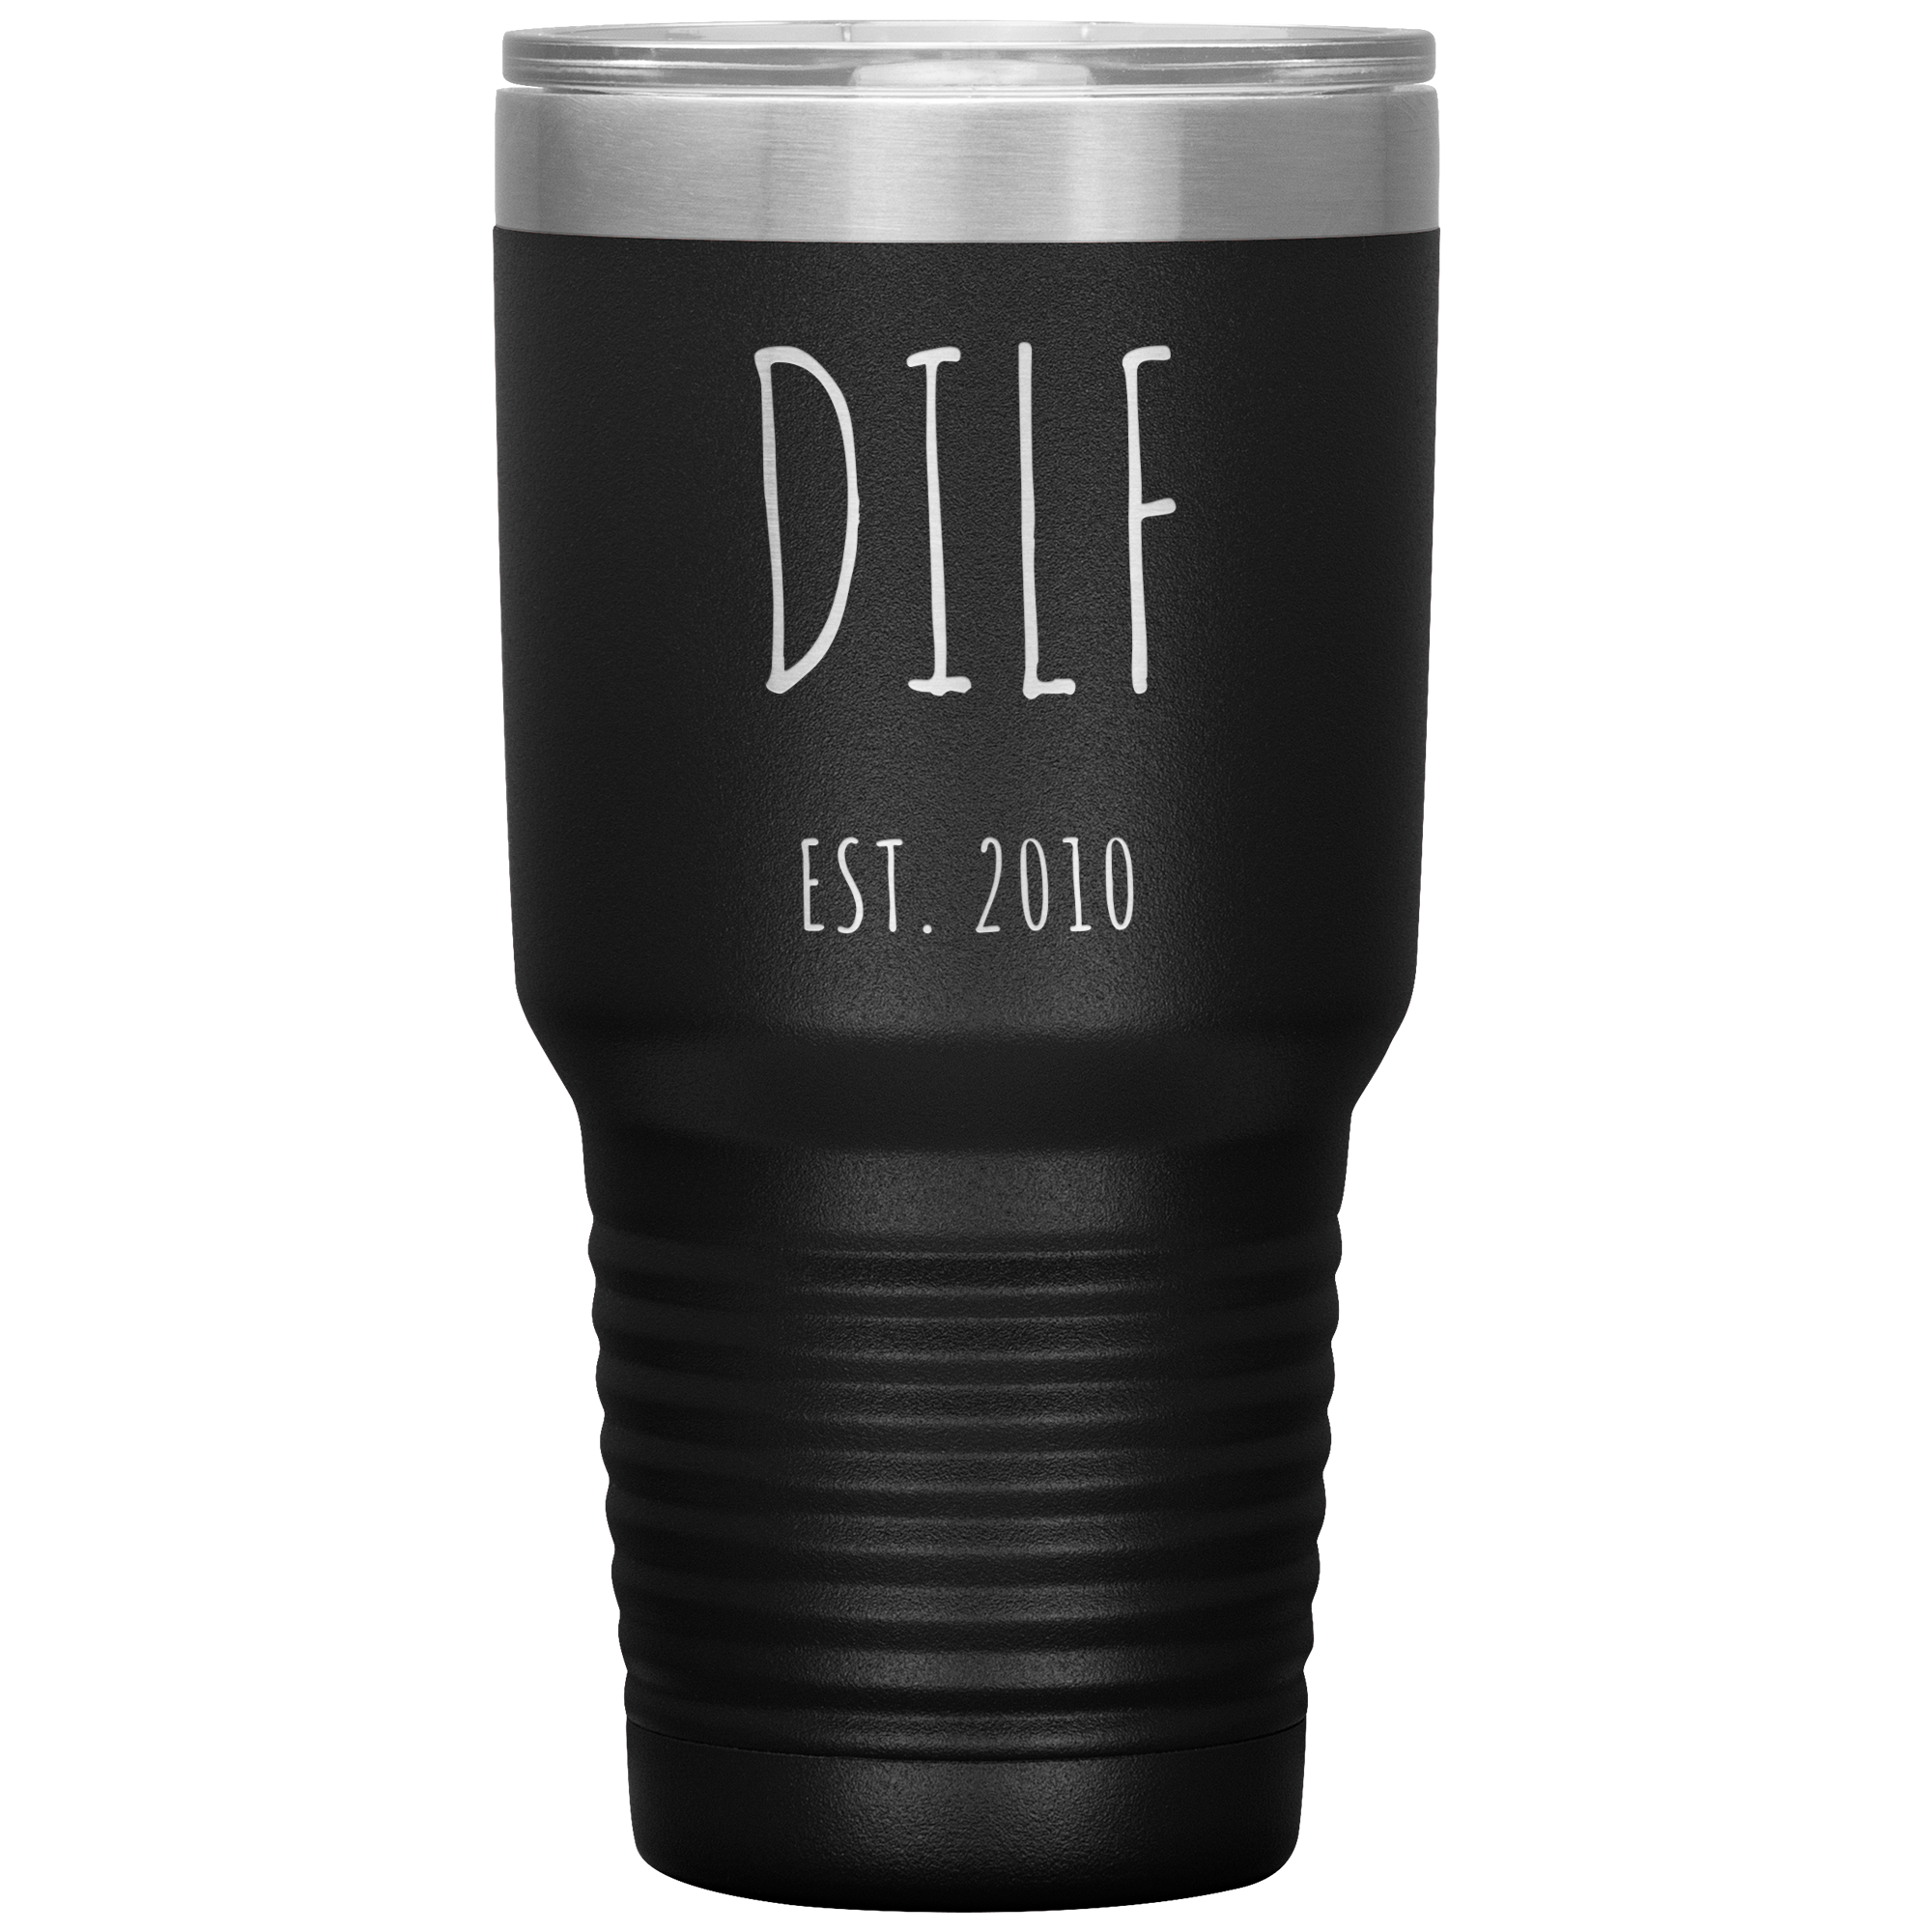 DILF Est 2010